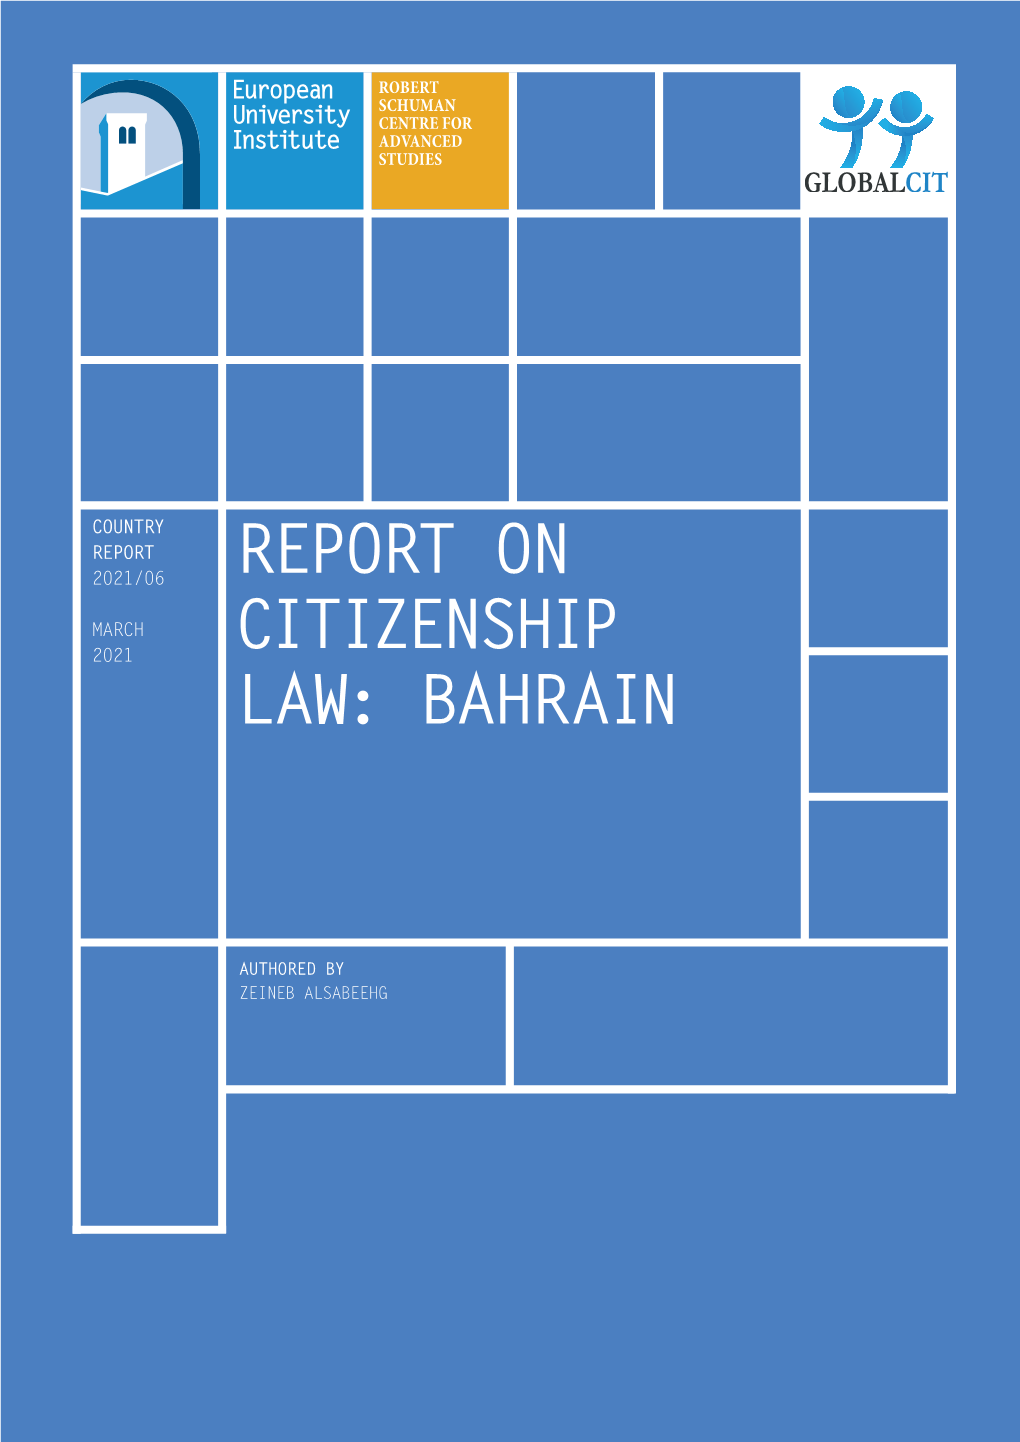 Bahrain RSCAS/GLOBALCIT-CR 2021/6 March 2021